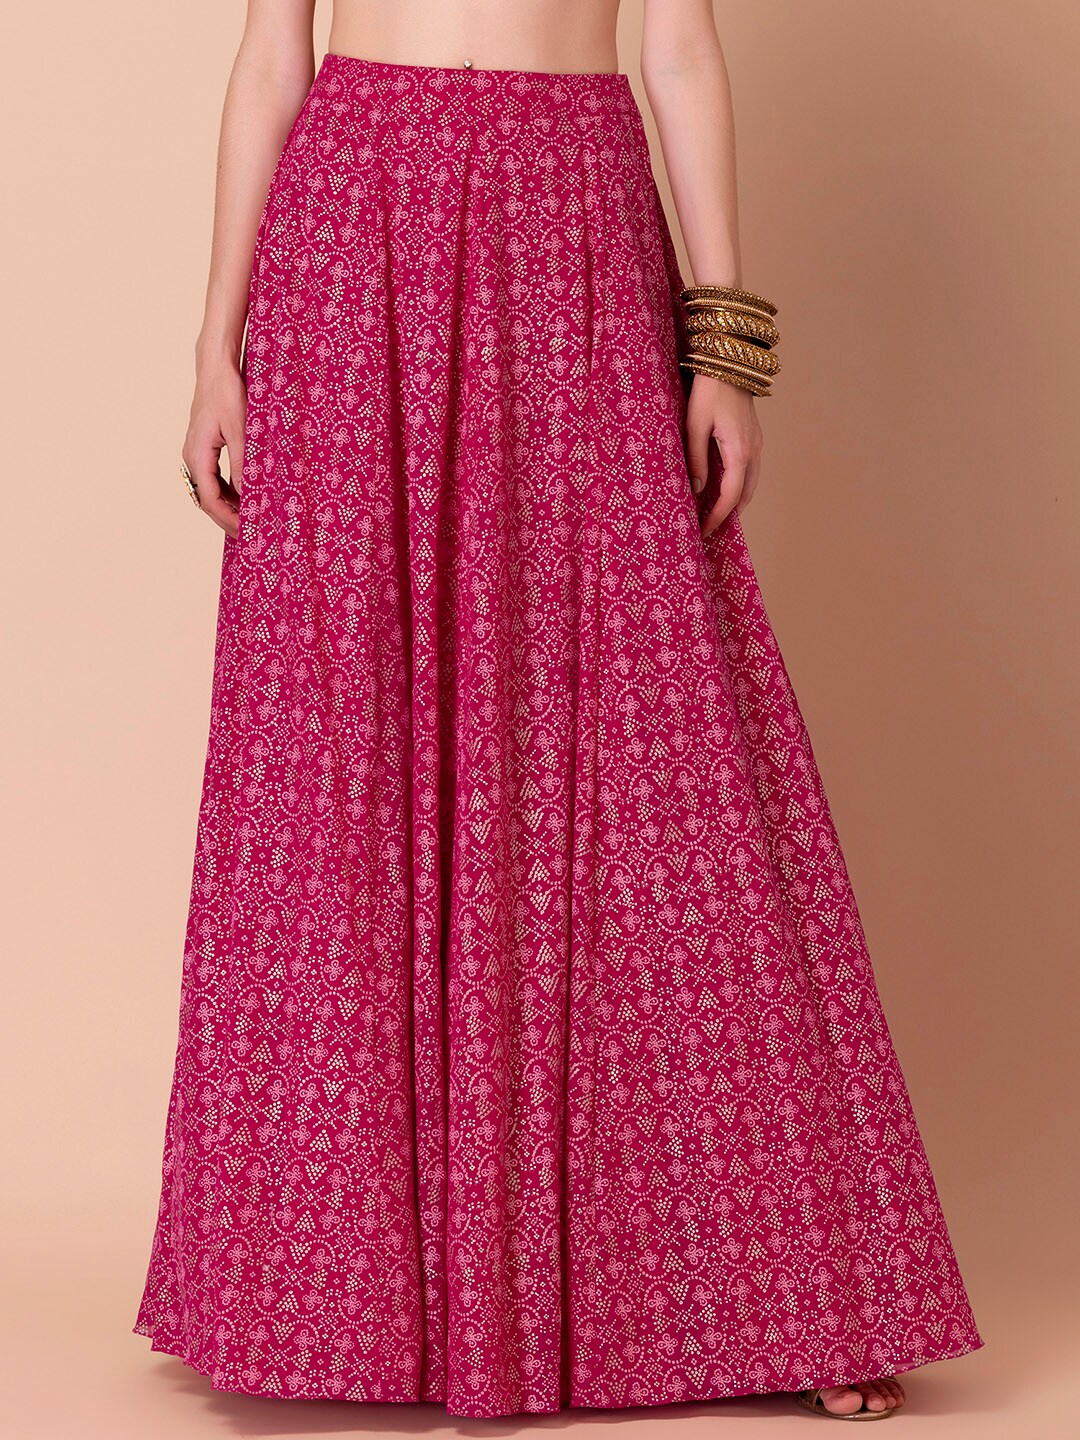 INDYA X Ridhi Mehra Women Pink Printed Maxi Skirts Price in India